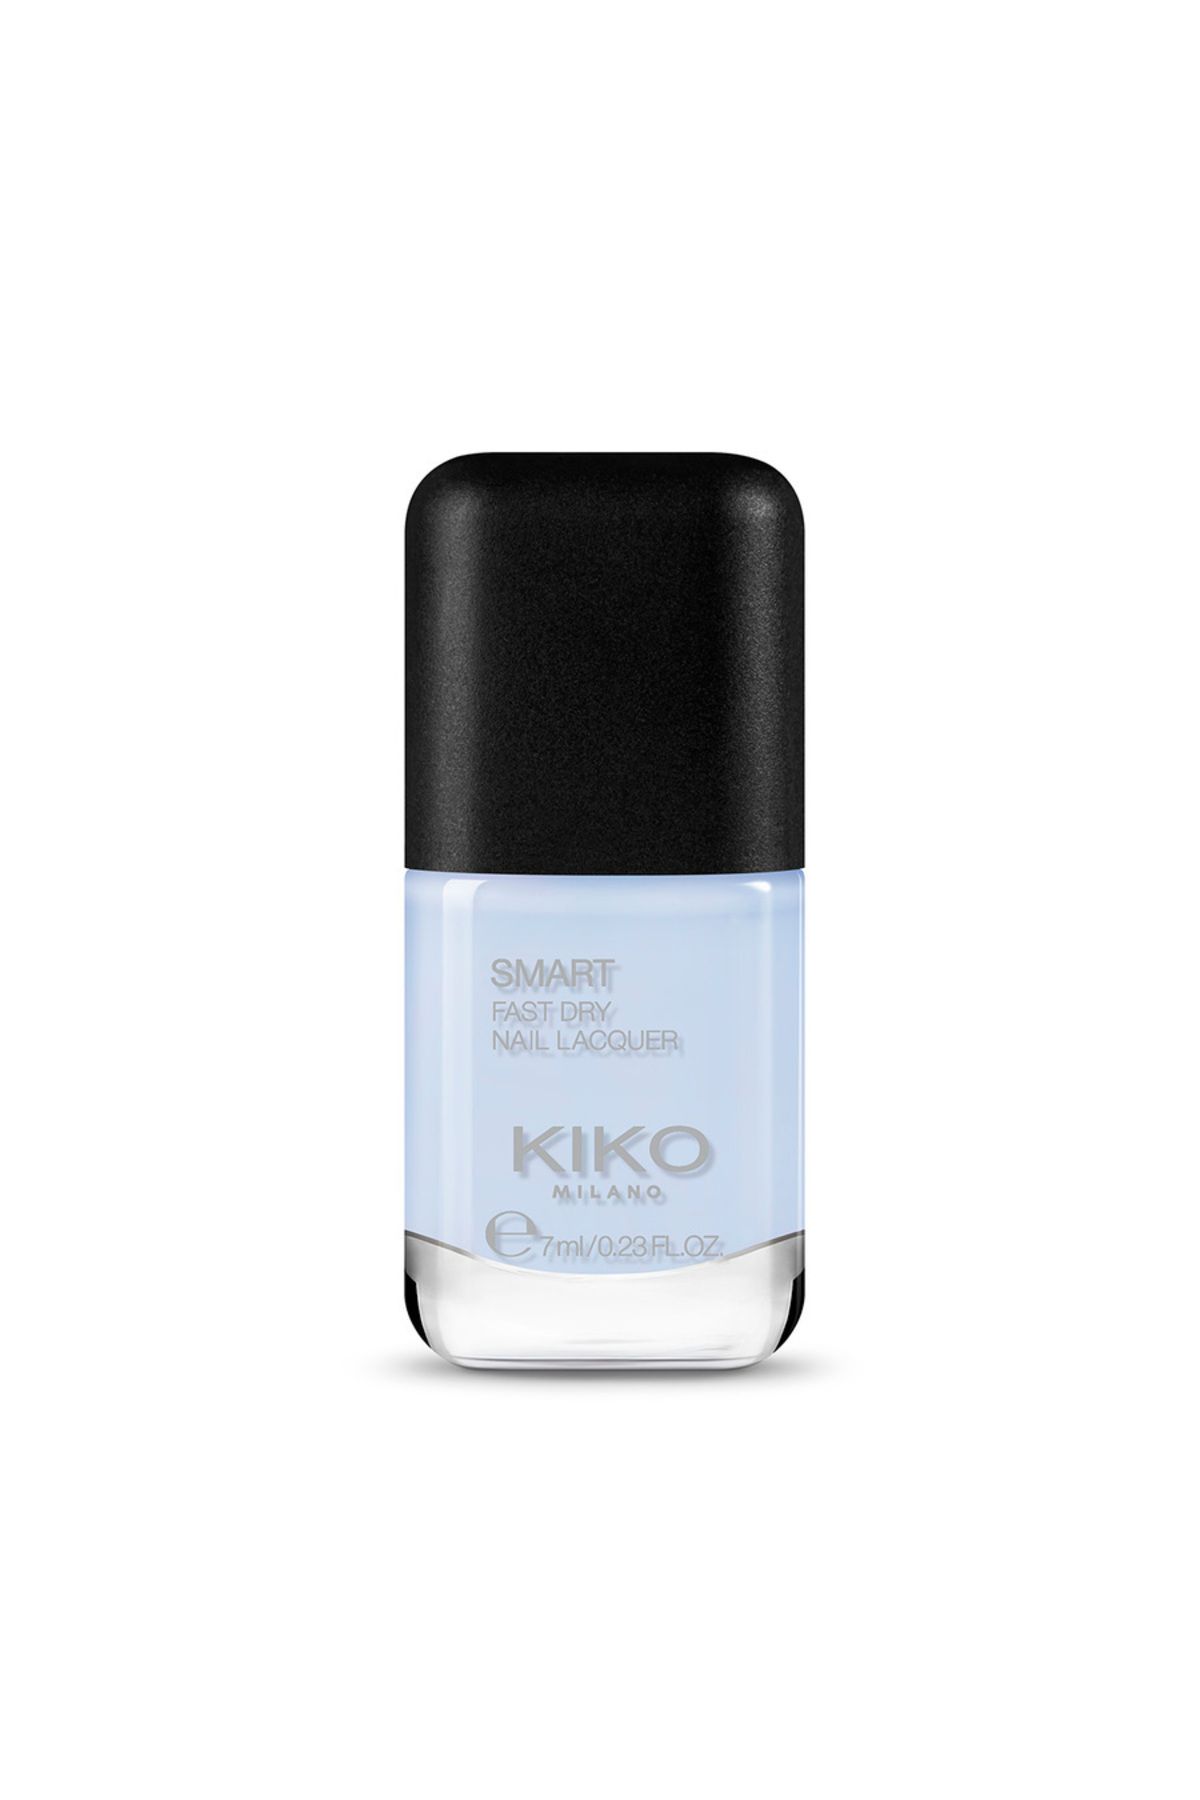 KIKO Oje - Smart Nail Lacquer 26 Pastel Light Blue